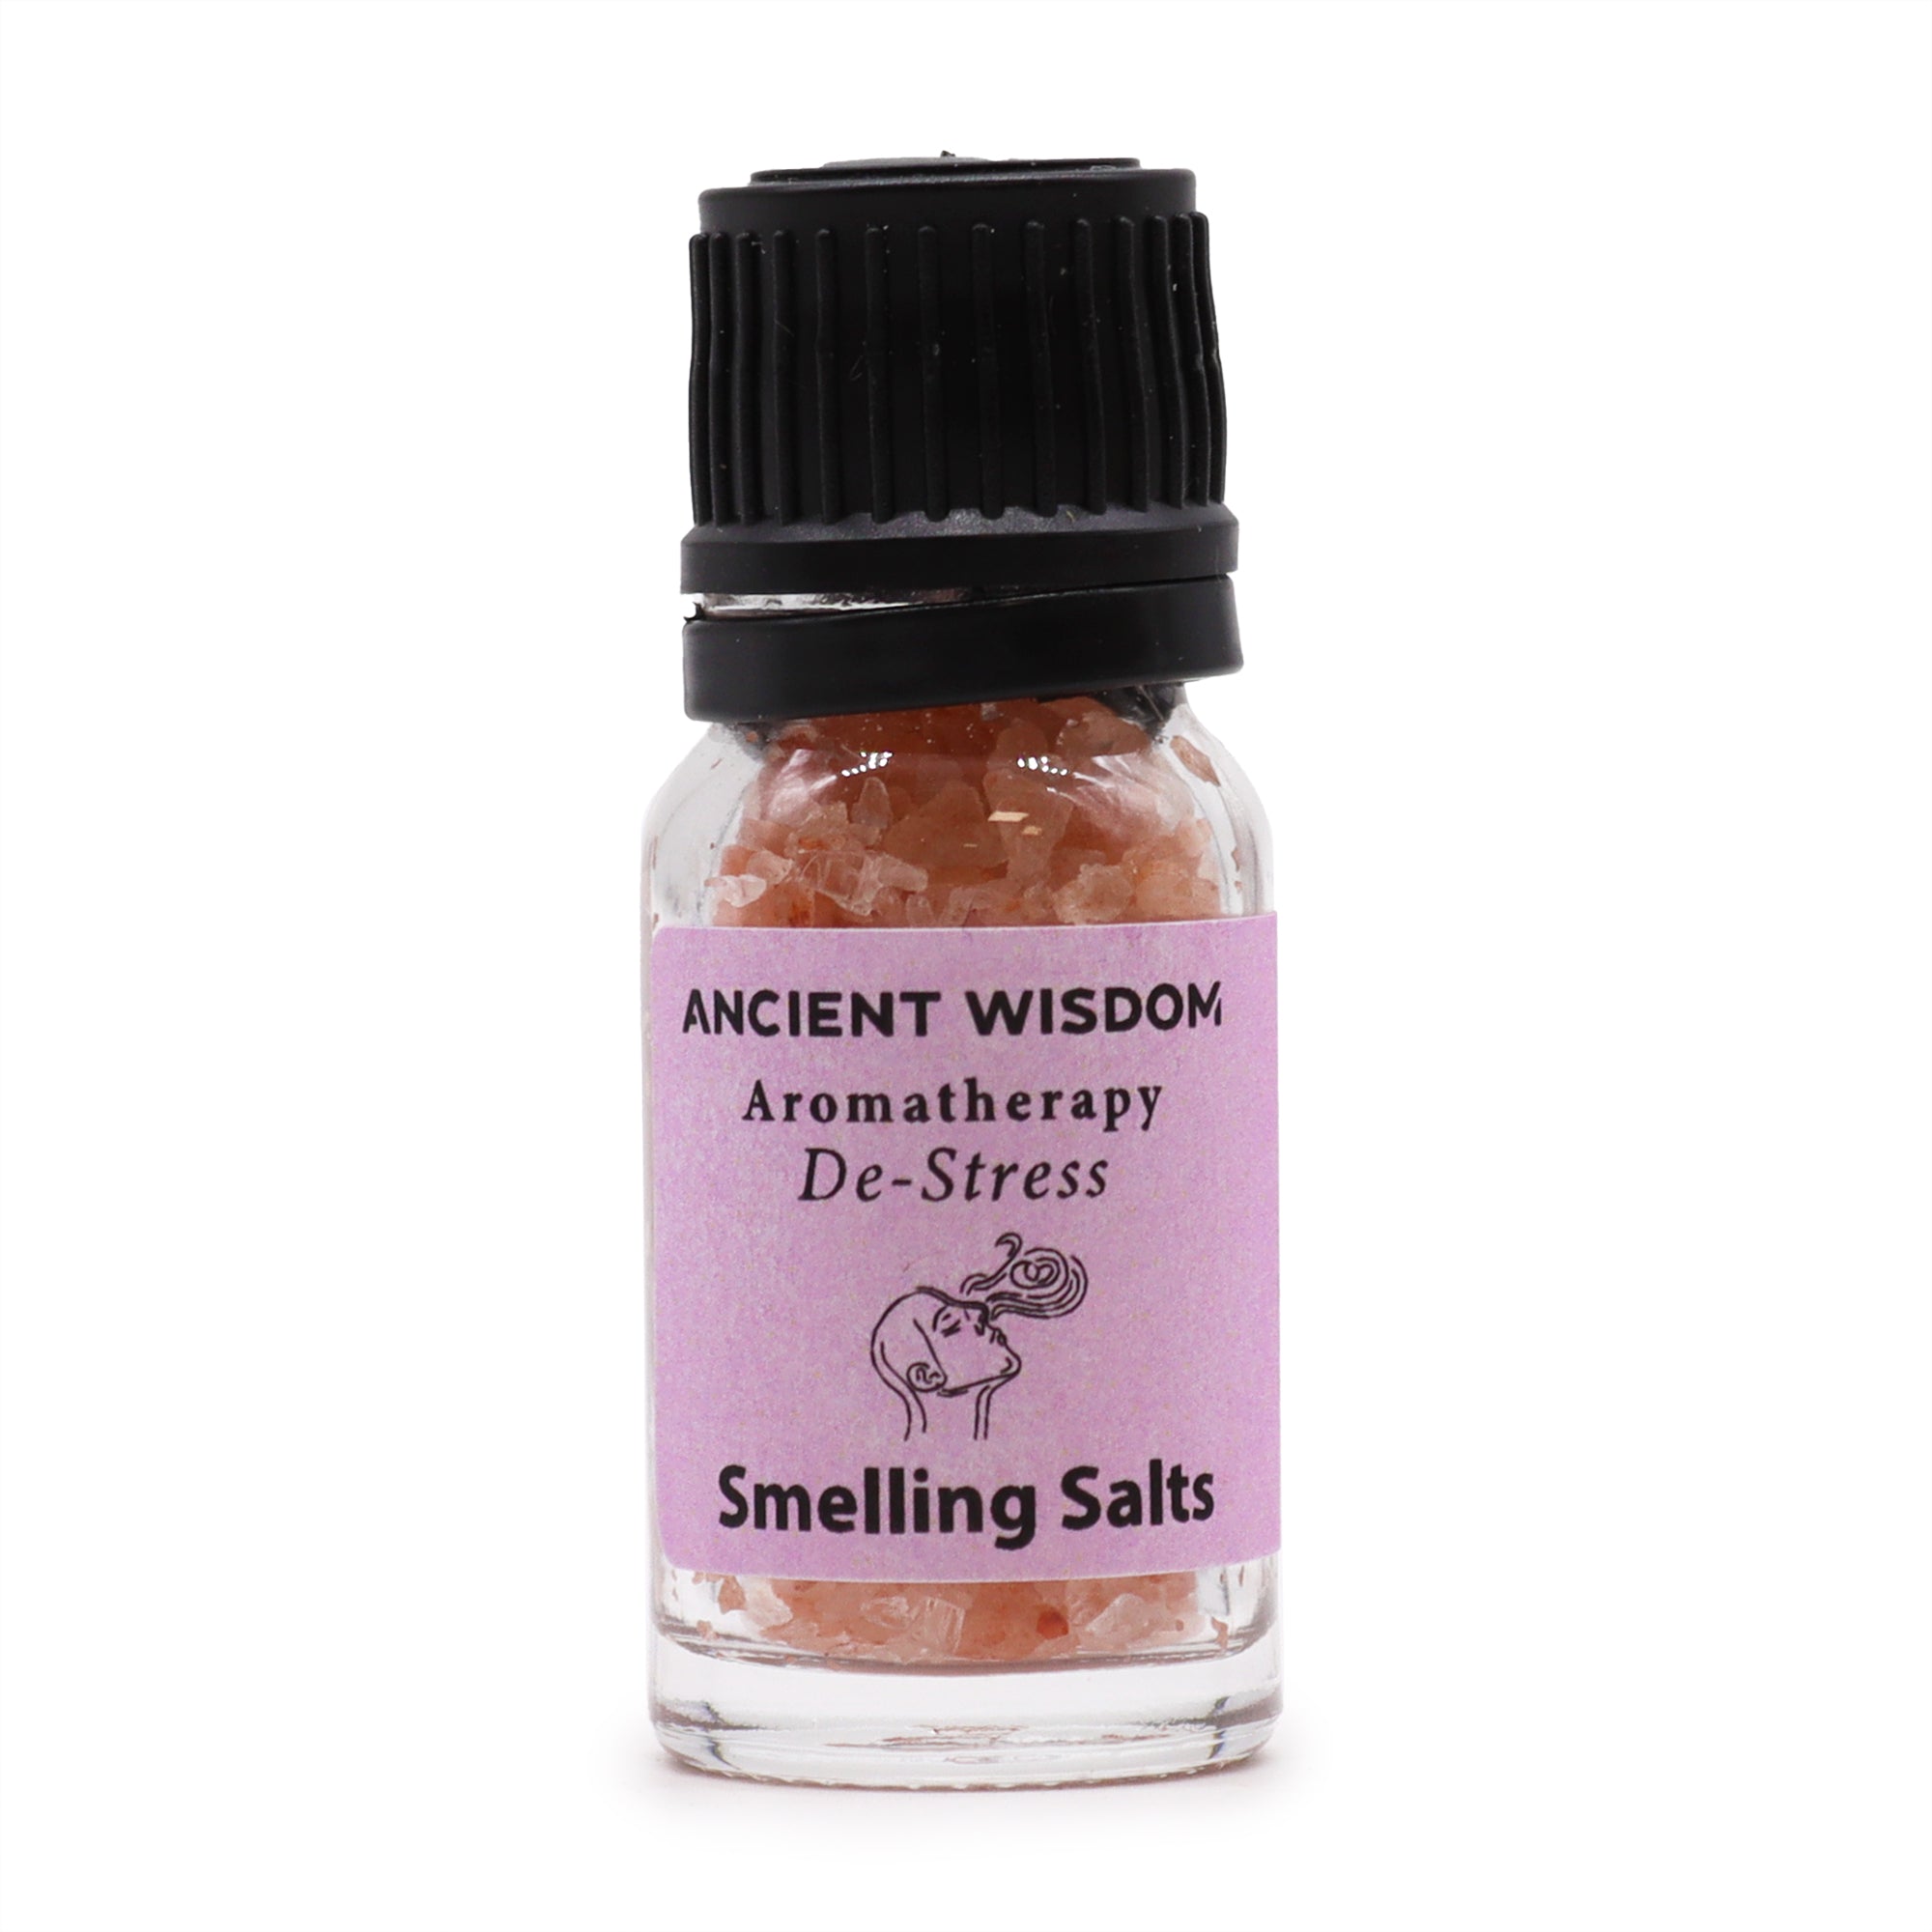 View DeStress Aromatherapy Smelling Salt information